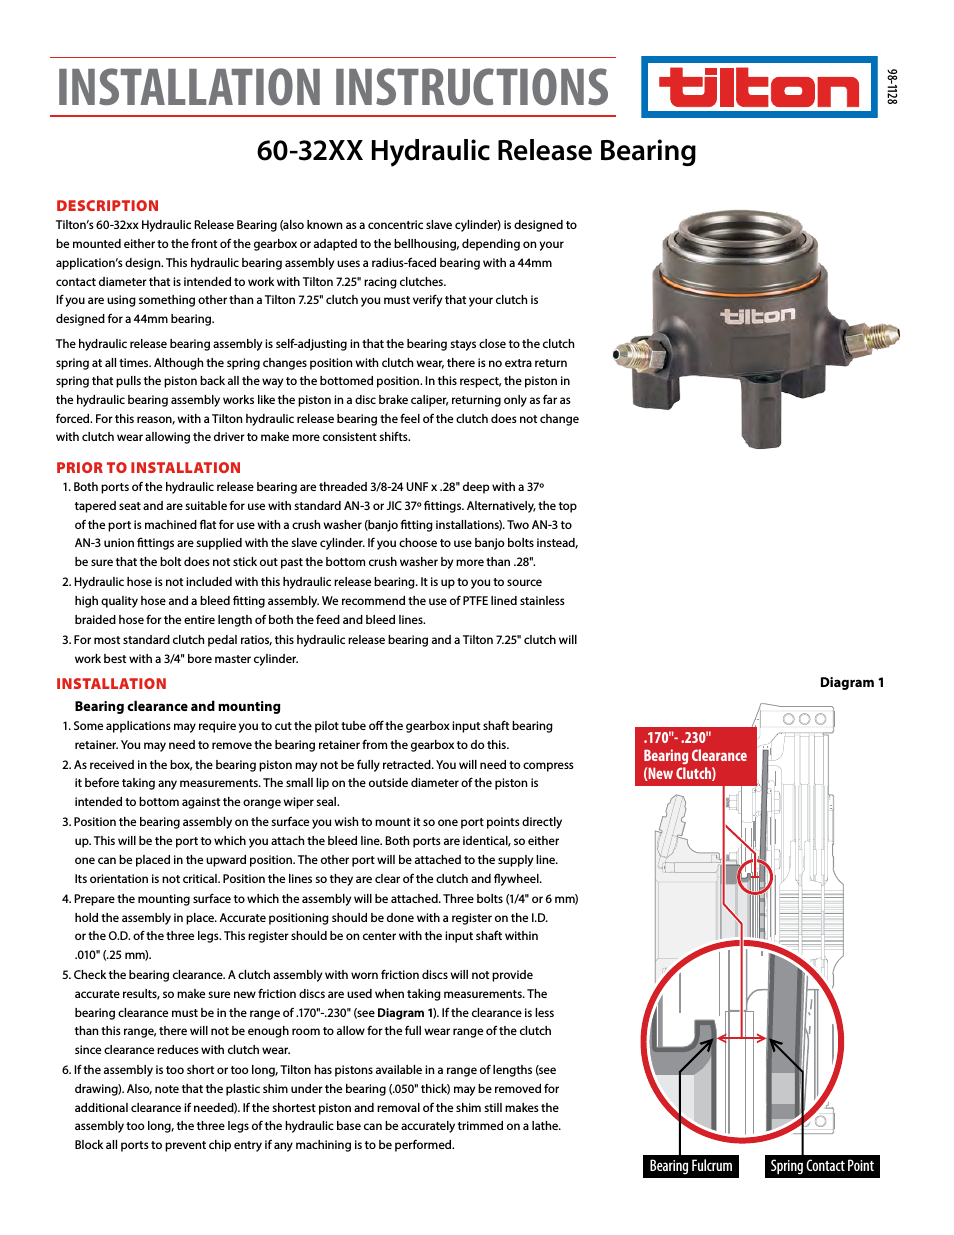 32XX Hydraulic Release Bearing (98-1128)